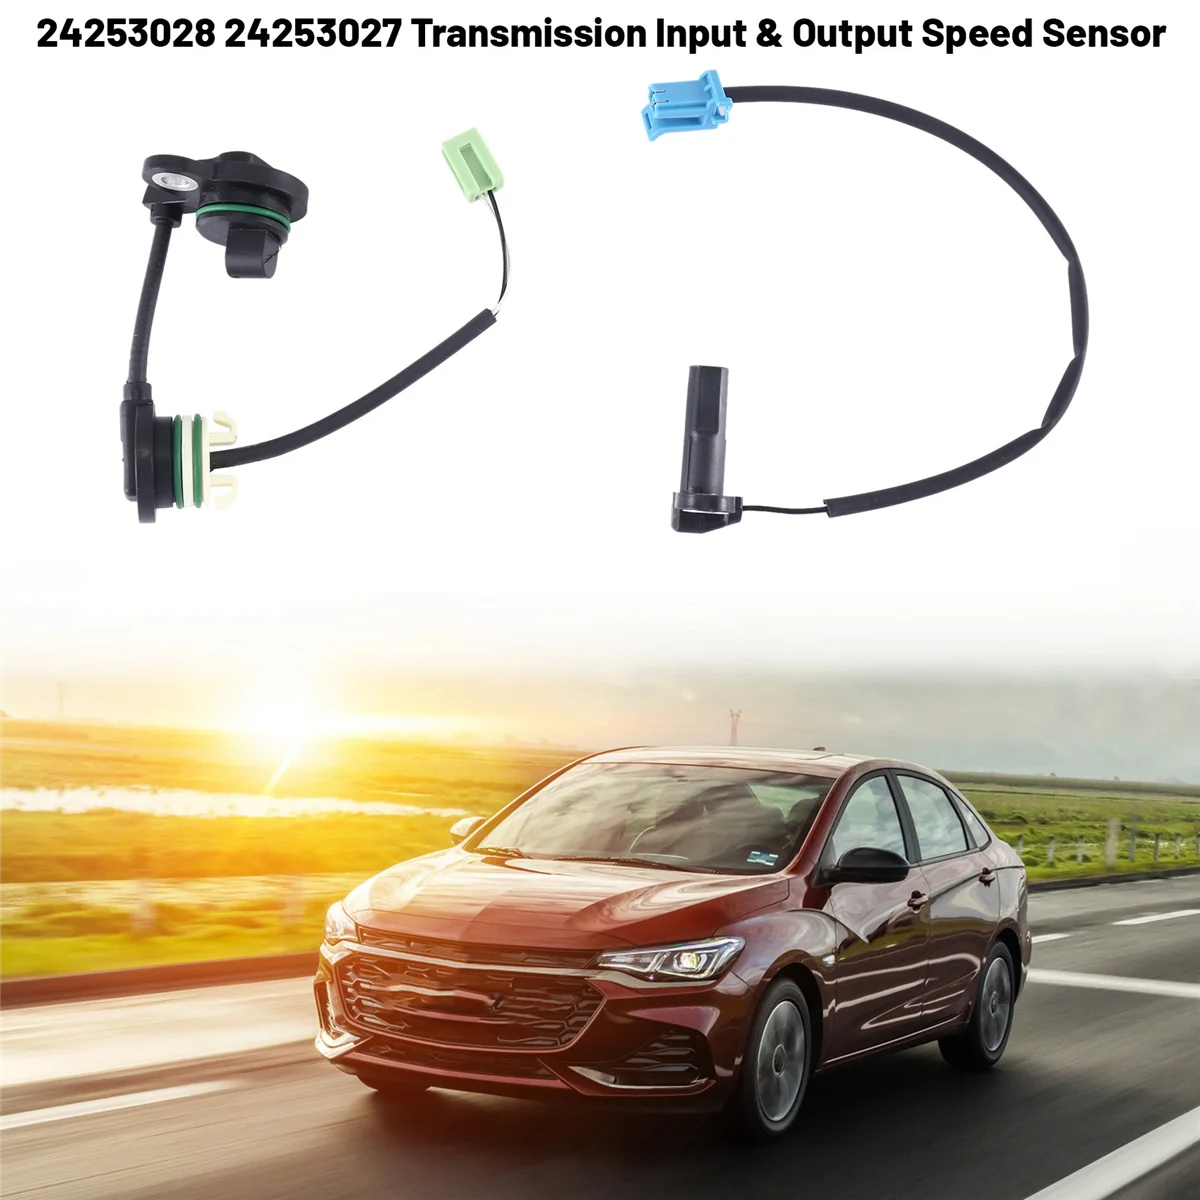 

24253028 24253027 Transmission Input & Output Speed Sensor for Chevrolet Cruze